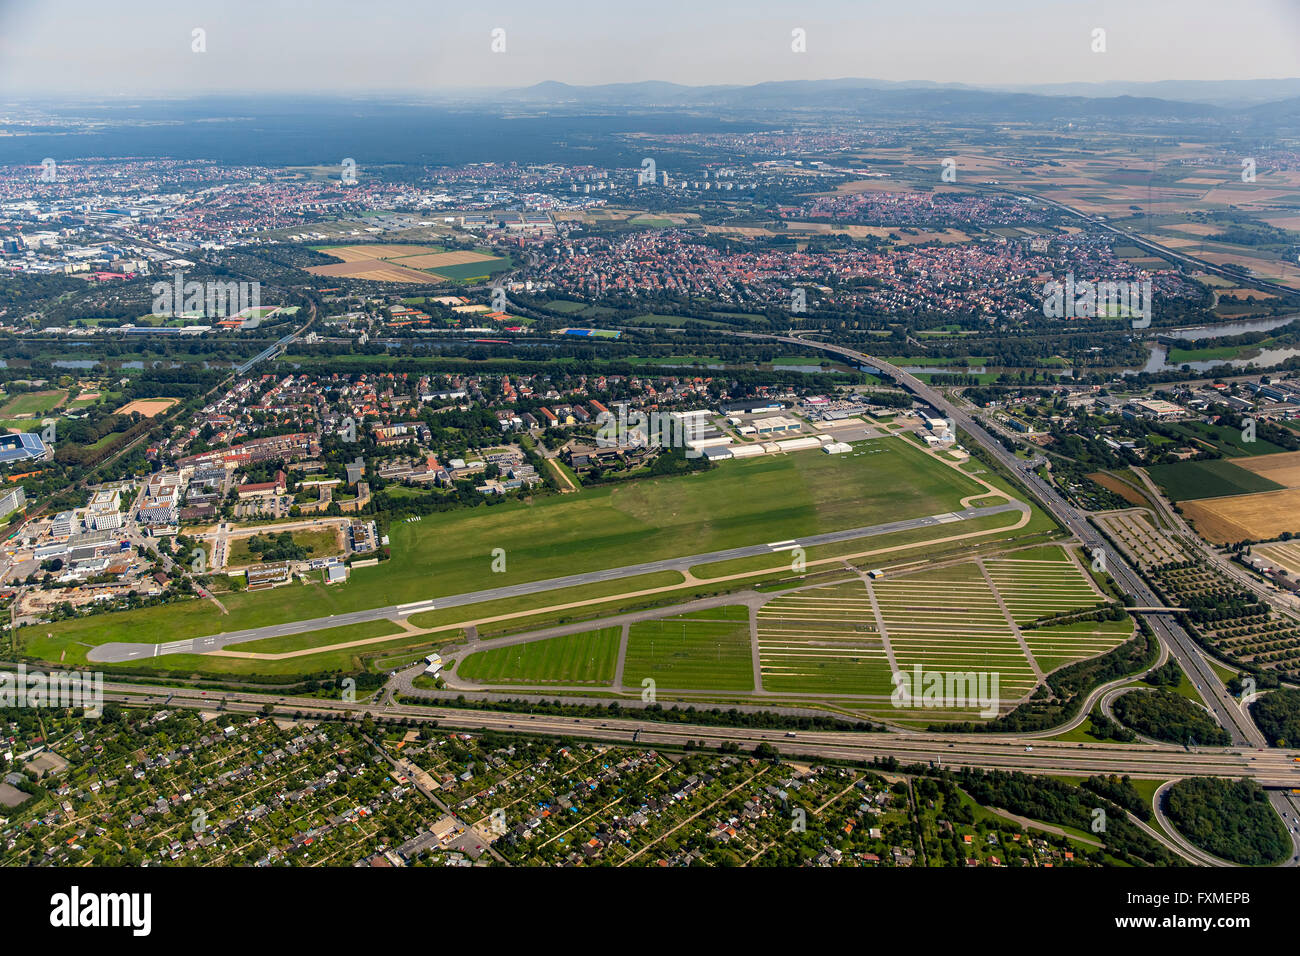 Vista aerea, aeroporto Mannheim-Neuostheim, airfield, aviazione generale, Mannheim, Baden-Württemberg, Germania, Europa, vista aerea, Foto Stock